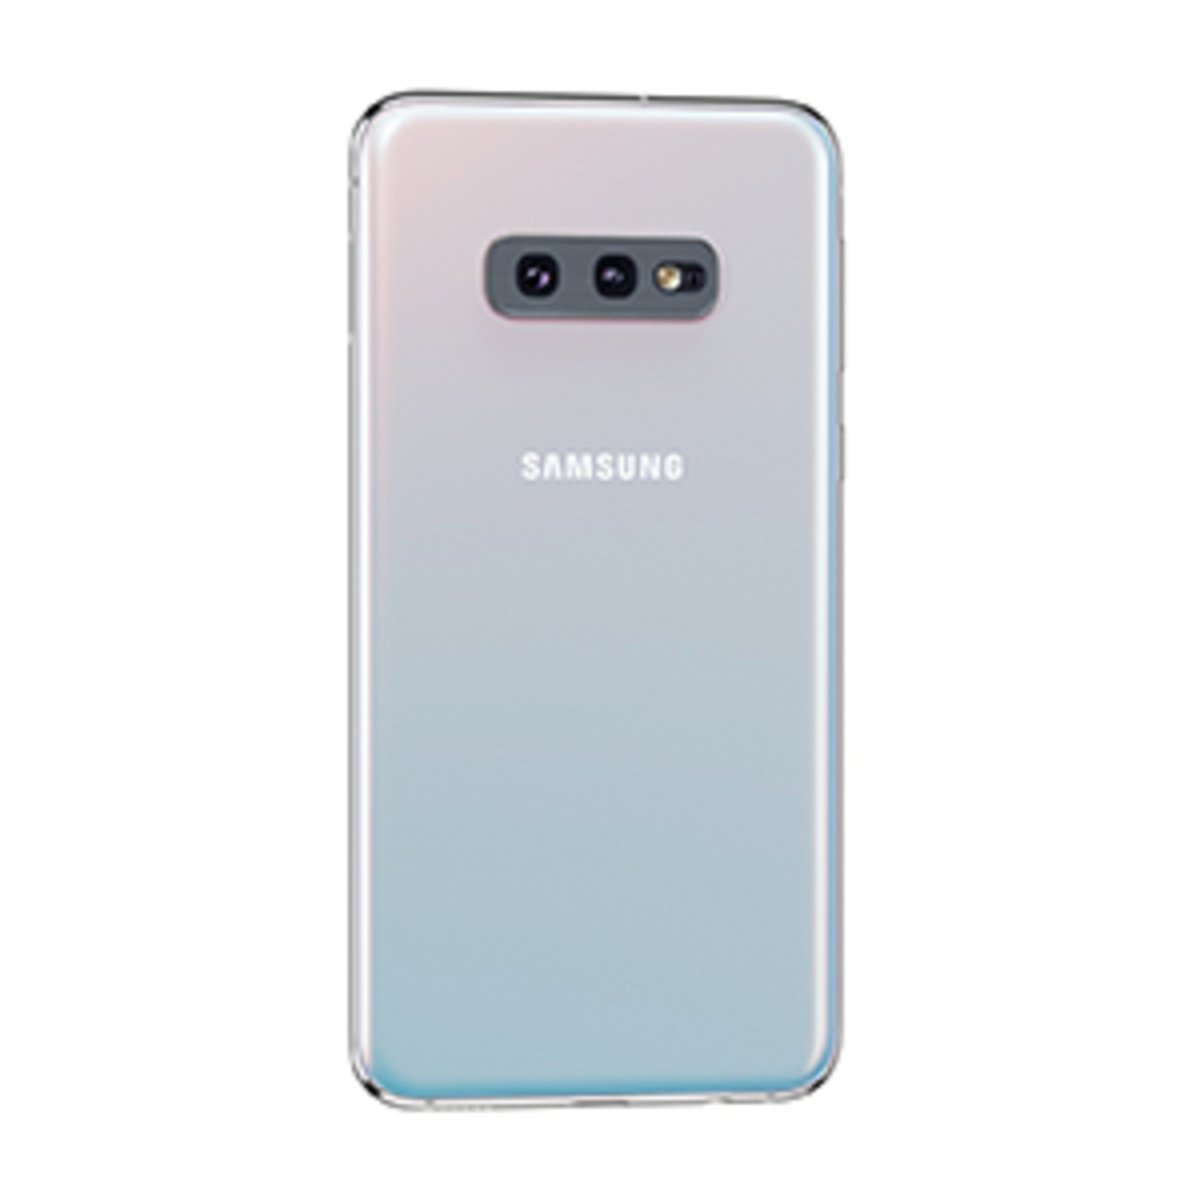 Samsung Galaxy S10e SM-G970 128GB White